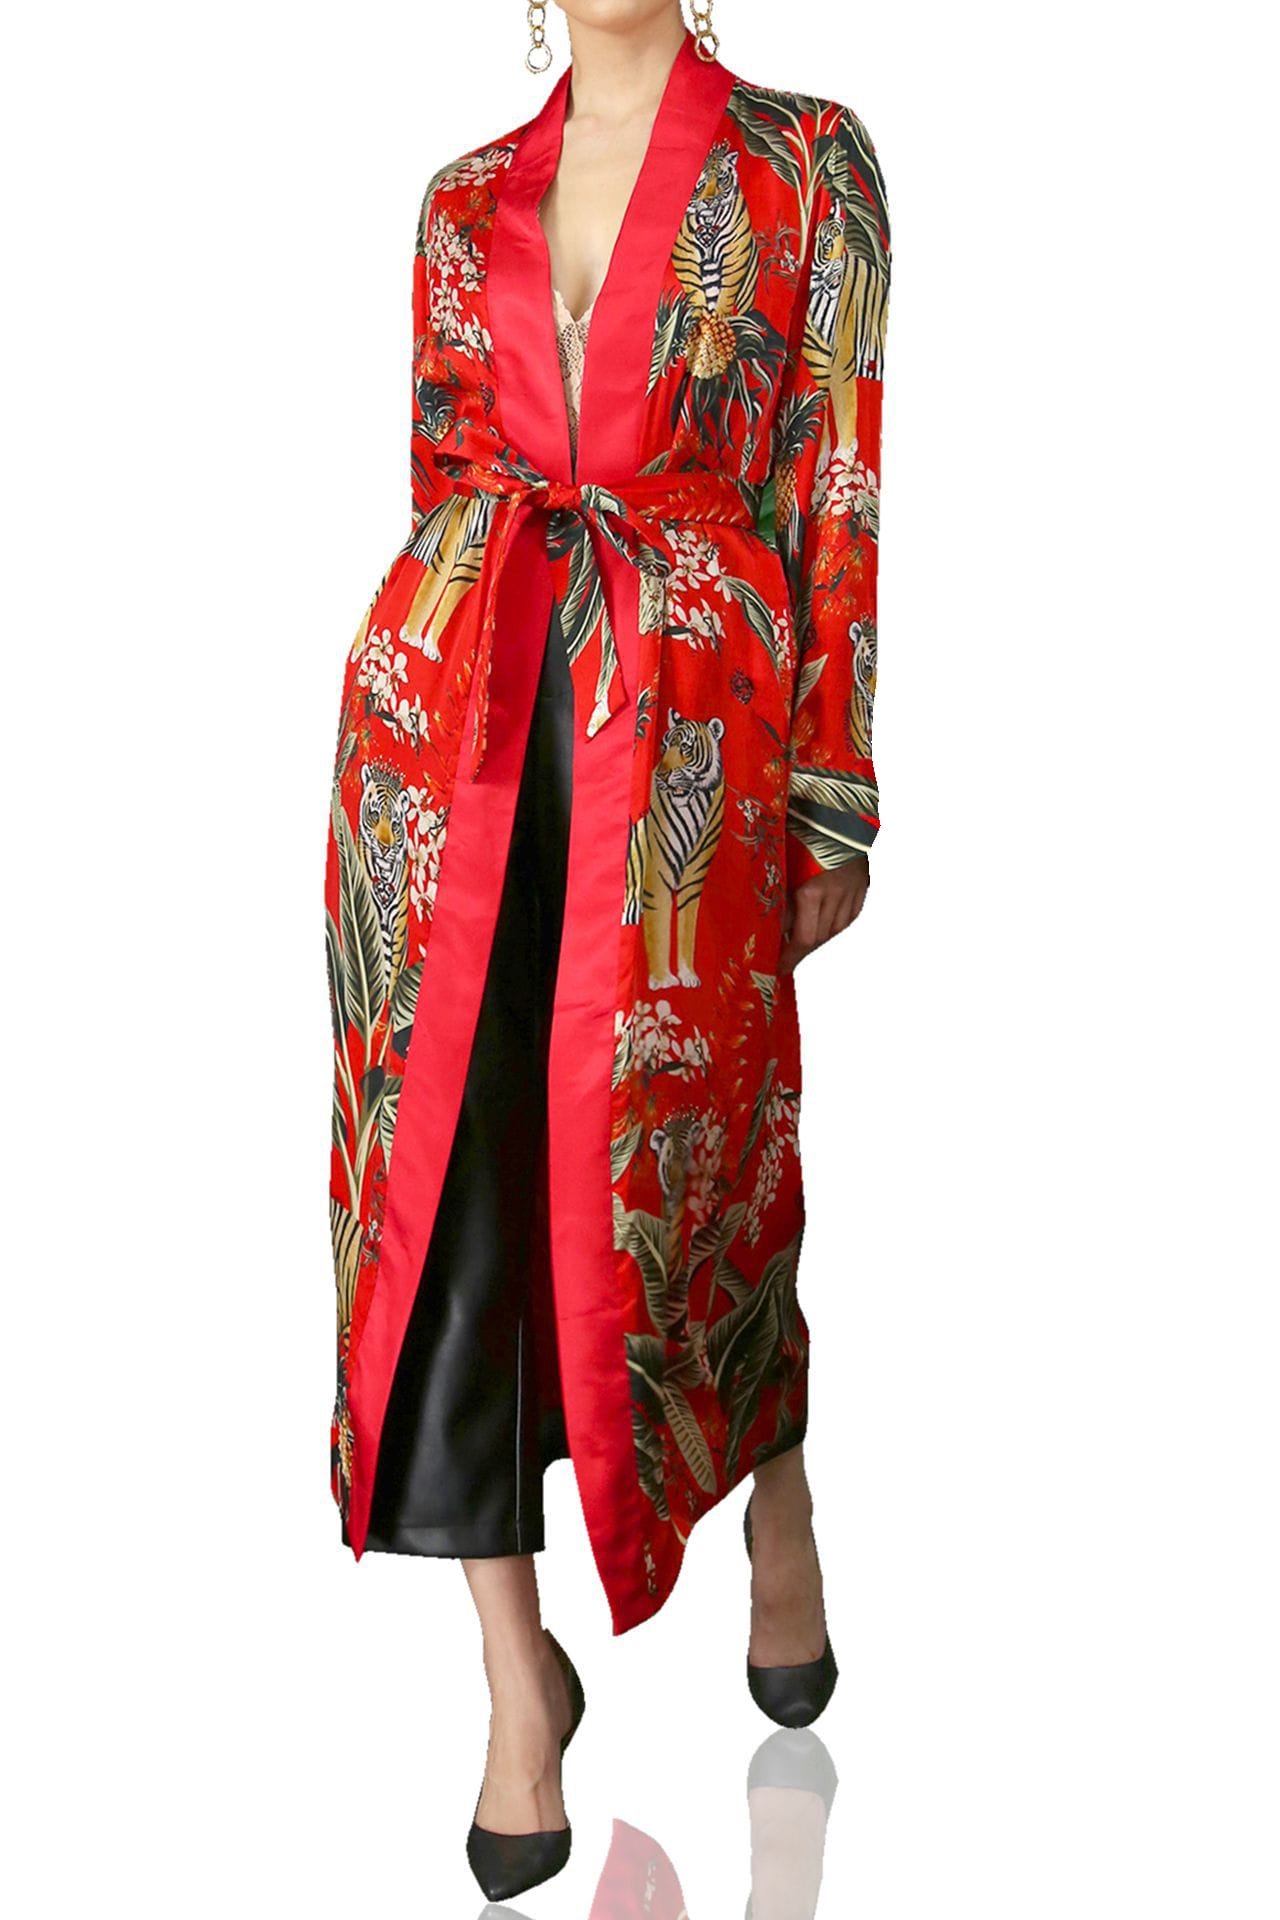 "Kyle X Shahida" "animal print kimono" "kimono silk robes for women"  "silk robes for women" "silk kimono for women"